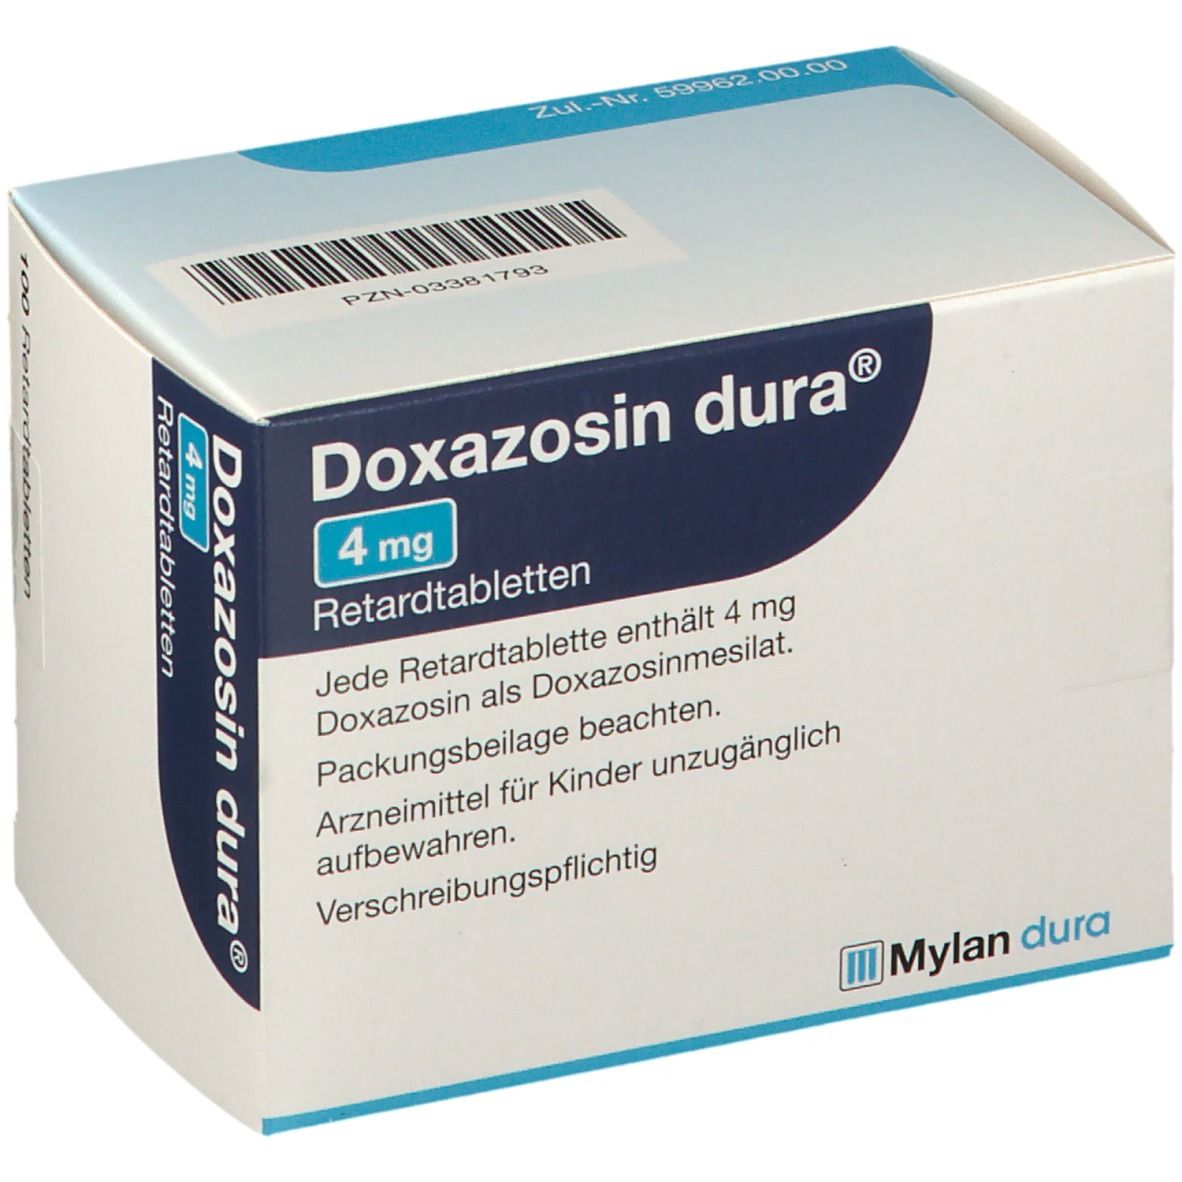 Doxazosin Dura® 4 mg Retardtabletten